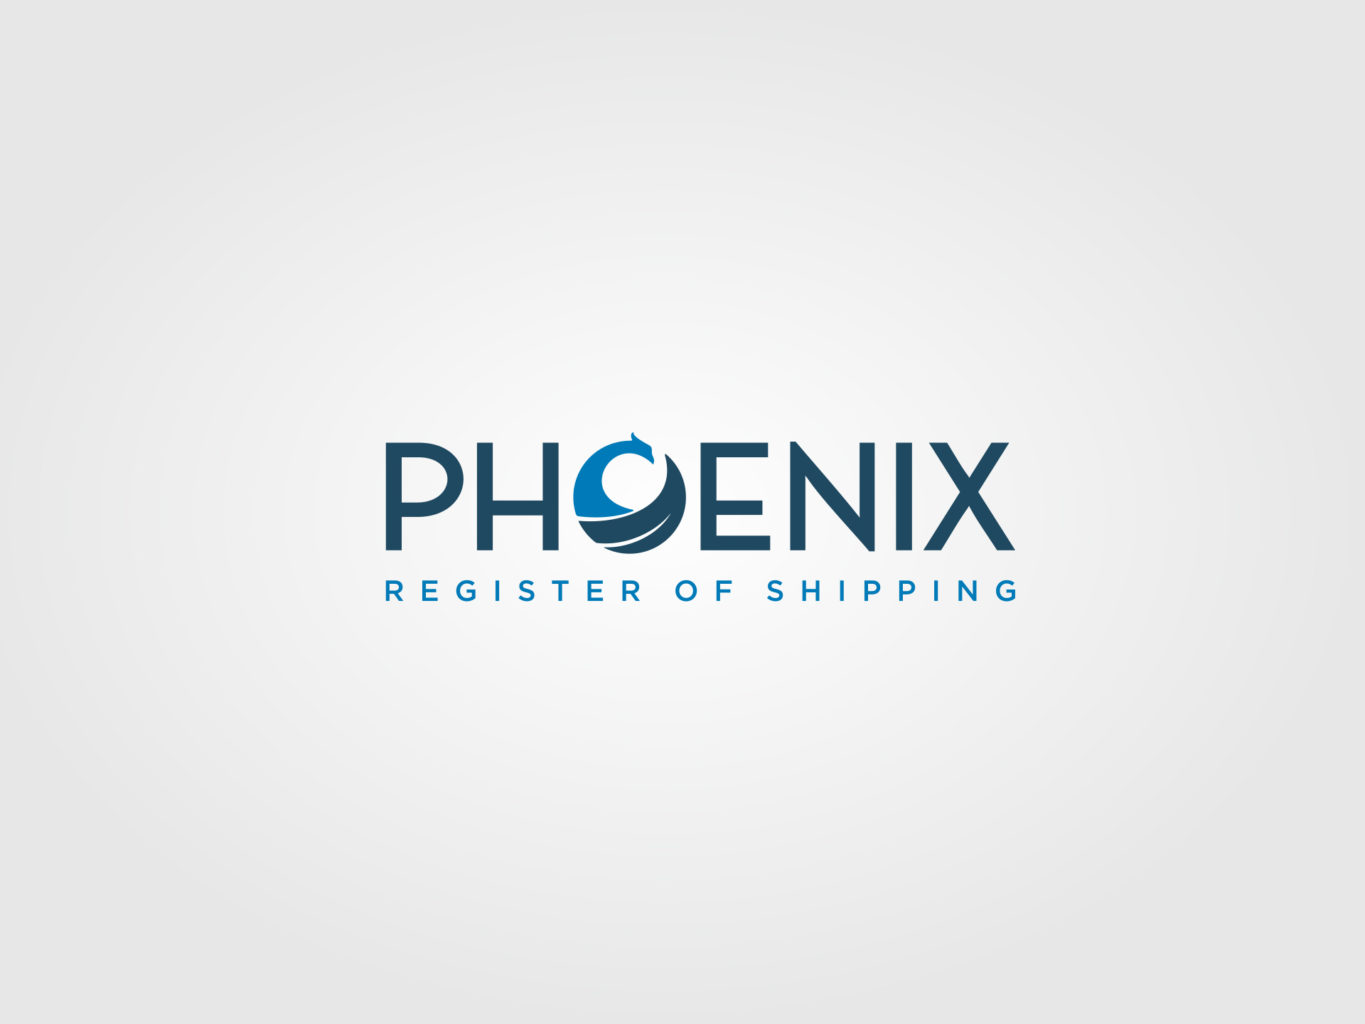 phoenix degistes of shipping logo by fiftyeggz